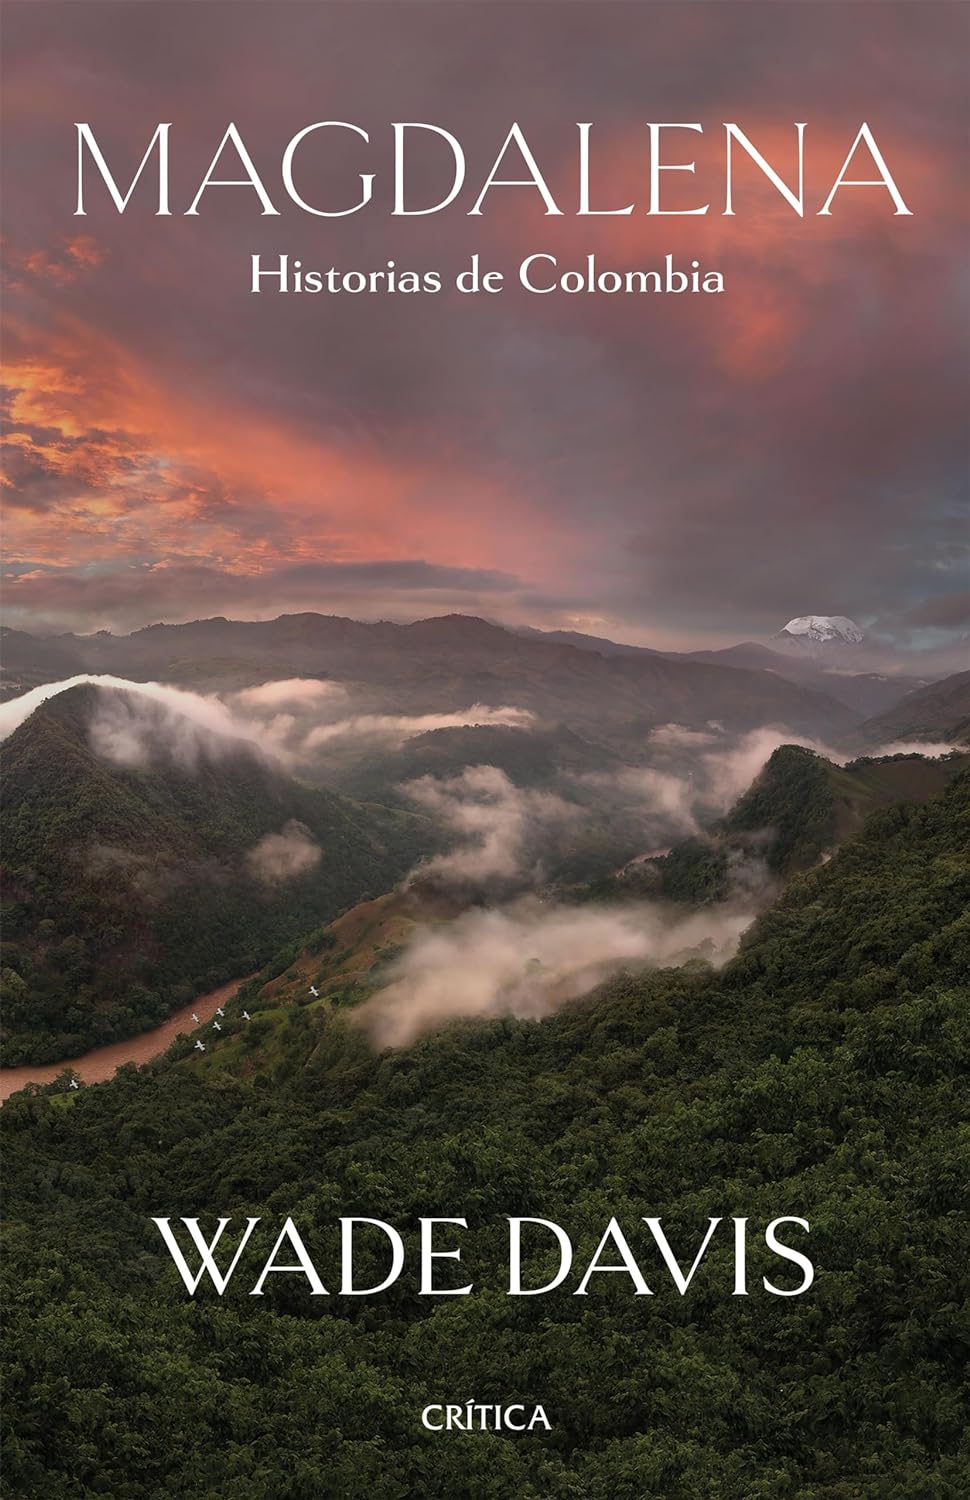 https://www.amazon.co.uk/Magdalena-Historias-Colombia-colecci%C3%B3n-Spanish-ebook/dp/B099SC5H5Z?ref_=ast_author_dp&dib=eyJ2IjoiMSJ9.J66Ny-veNzHBI0l0kwclrcsOqnVCC_U-iYsGfKFCtSS-Nb5UpqUbX4_SVoBVqaSR7zZNQxC9gs0eQATN2FlKTh2fZU_07XQTglBpccfAI2q_E0TLai1UYa8Xi1Owr7p-TbBTWQ-tPPcDQ57kNvSR-y4aeLk0OpQc2zM5YnOpnV7hGnTfDcDOuVXZ_HLebfshFCZEoUDQFvJWIAF5bY7t_voRlO0enjpsa82iOACbjZA.0grukkSQYEbMhfWGz1knnTfU_Ohrh9B_dLtX2AcUbpc&dib_tag=AUTHOR